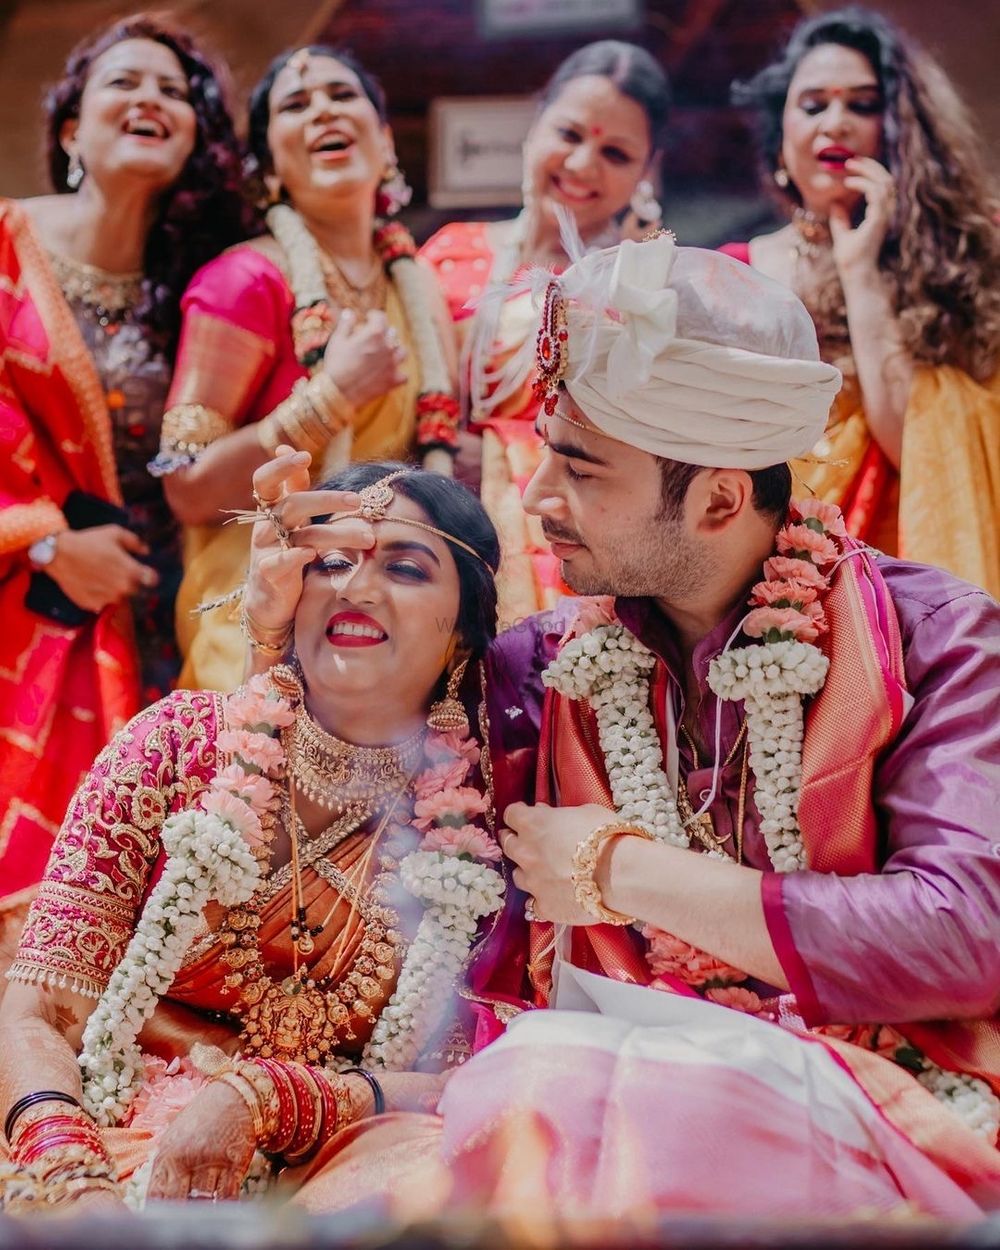 Photo From Thrishala & Nipun - Wedding - By Deepak Vijay Photography